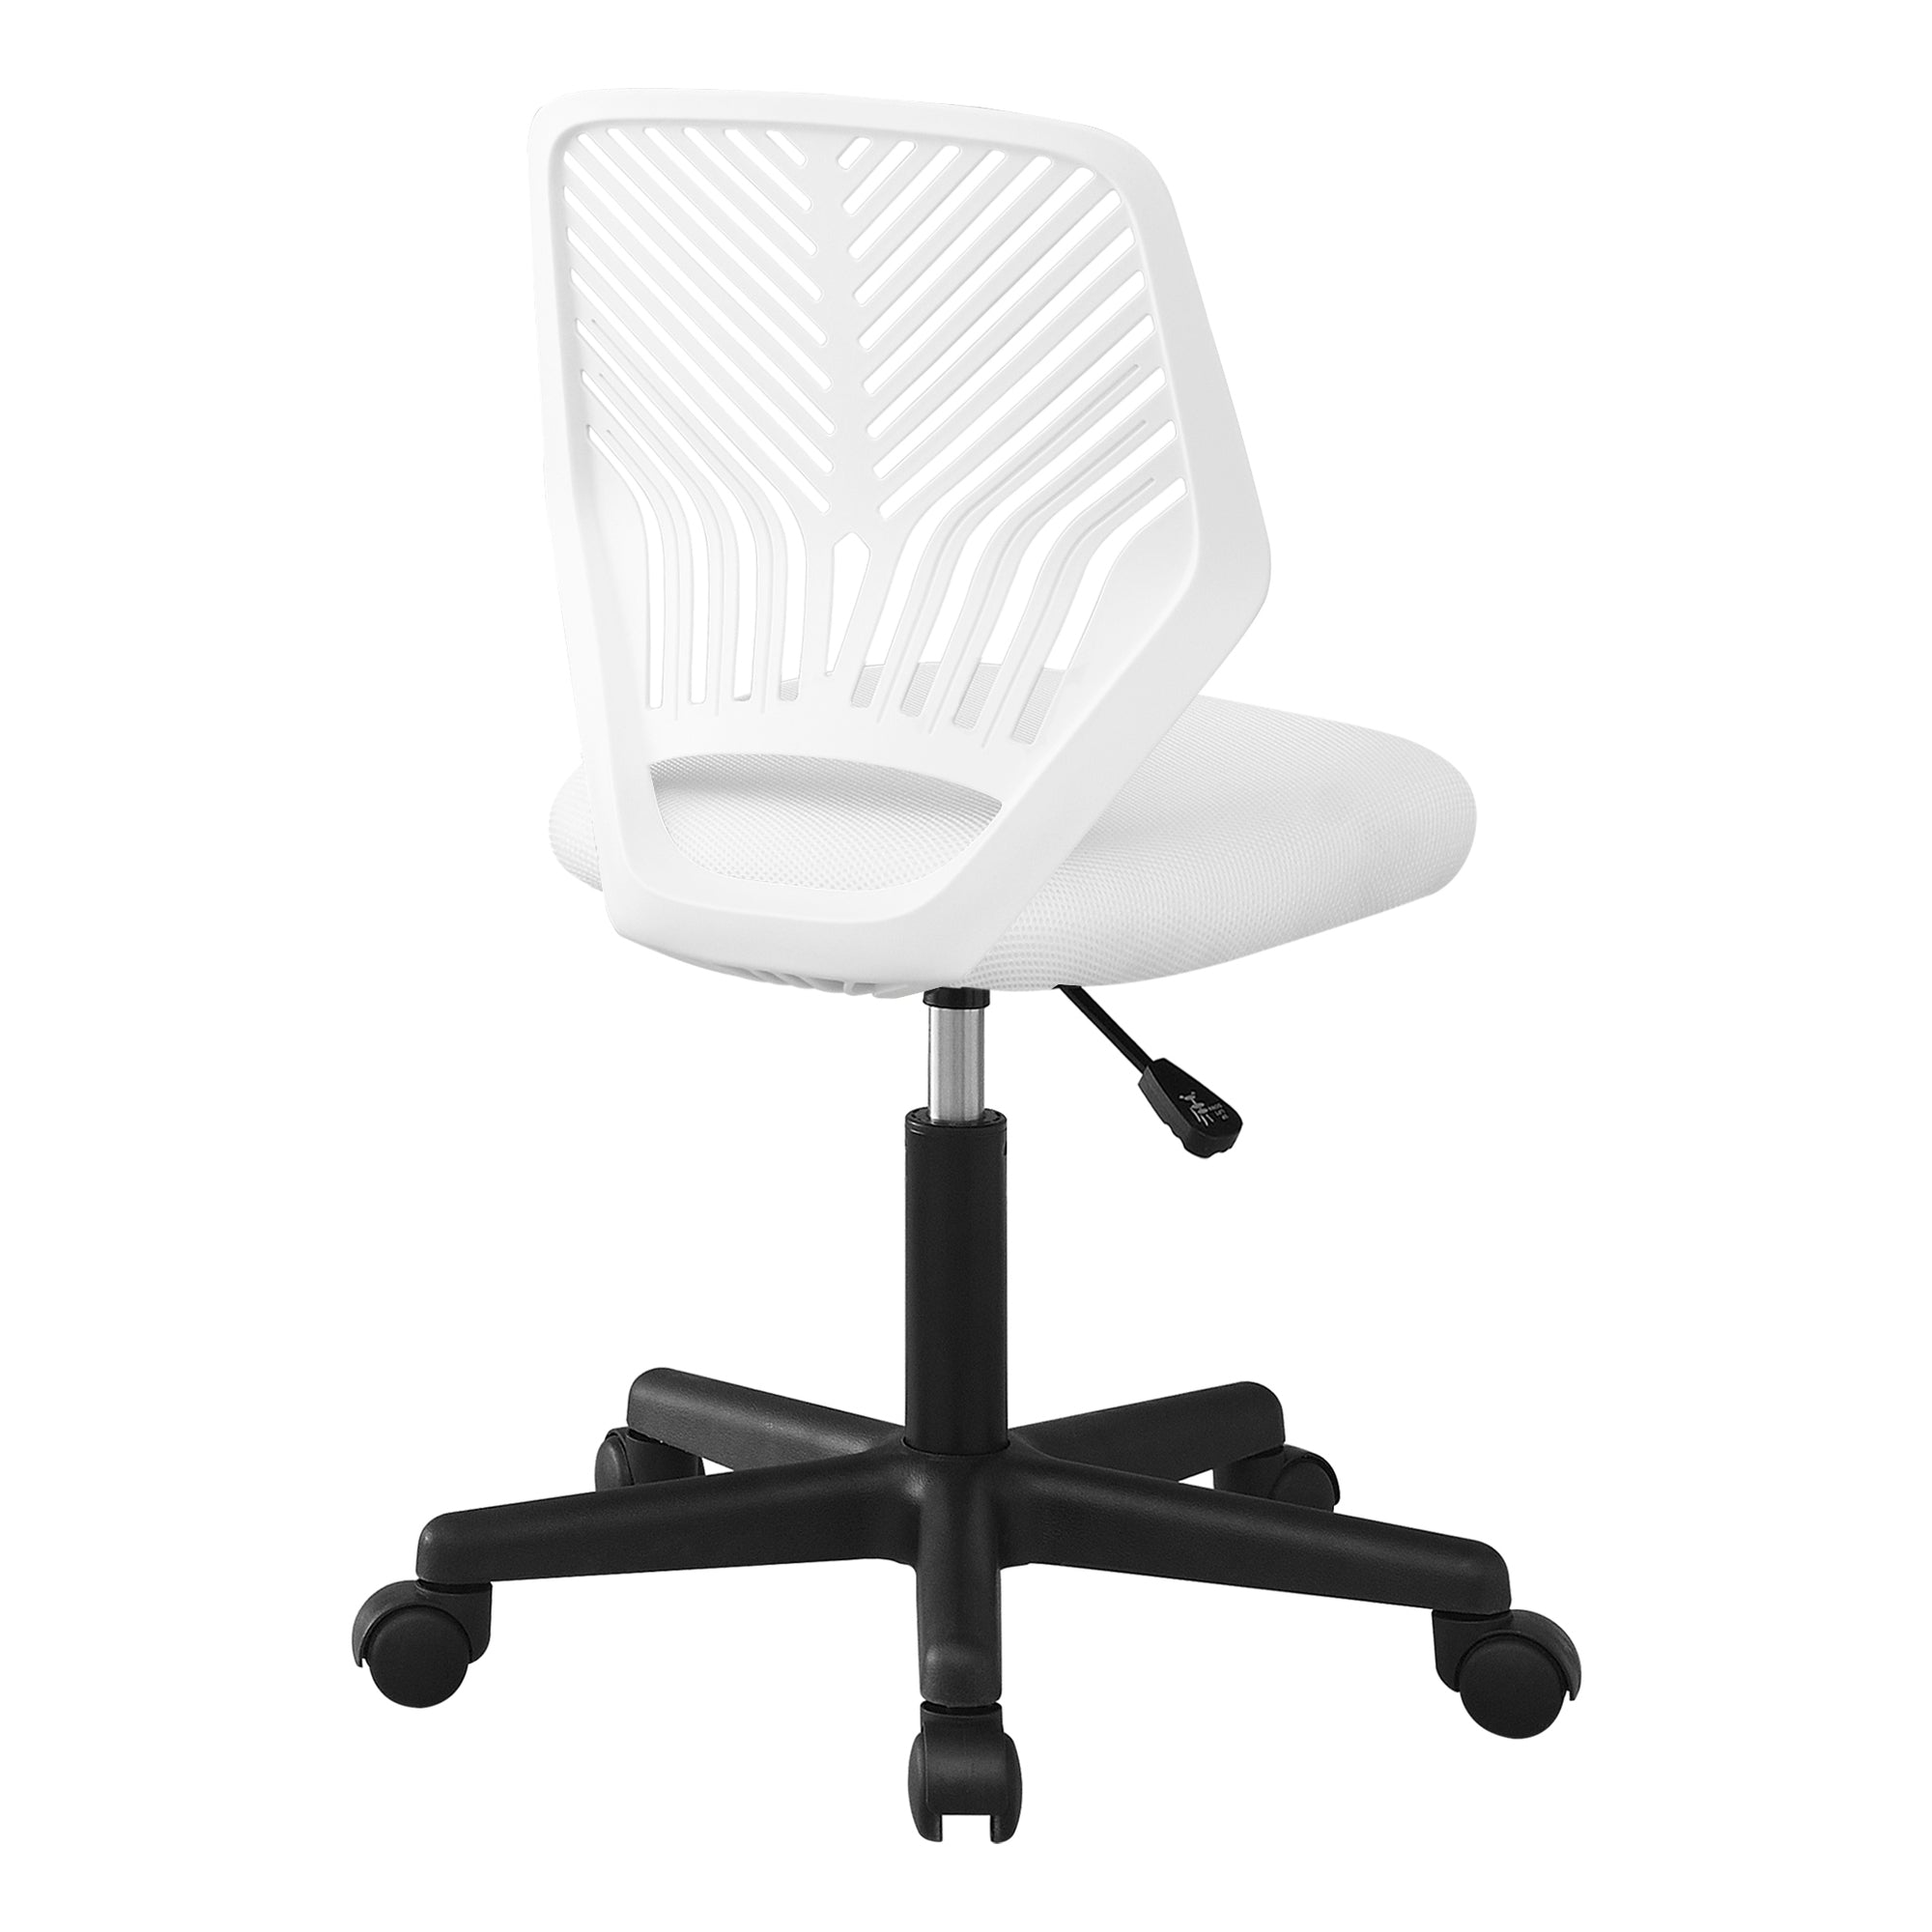 MN-337338    Office Chair, Adjustable Height, Swivel, Ergonomic, Computer Desk, Office, Metal, Laminate, White, Contemporary, Modern